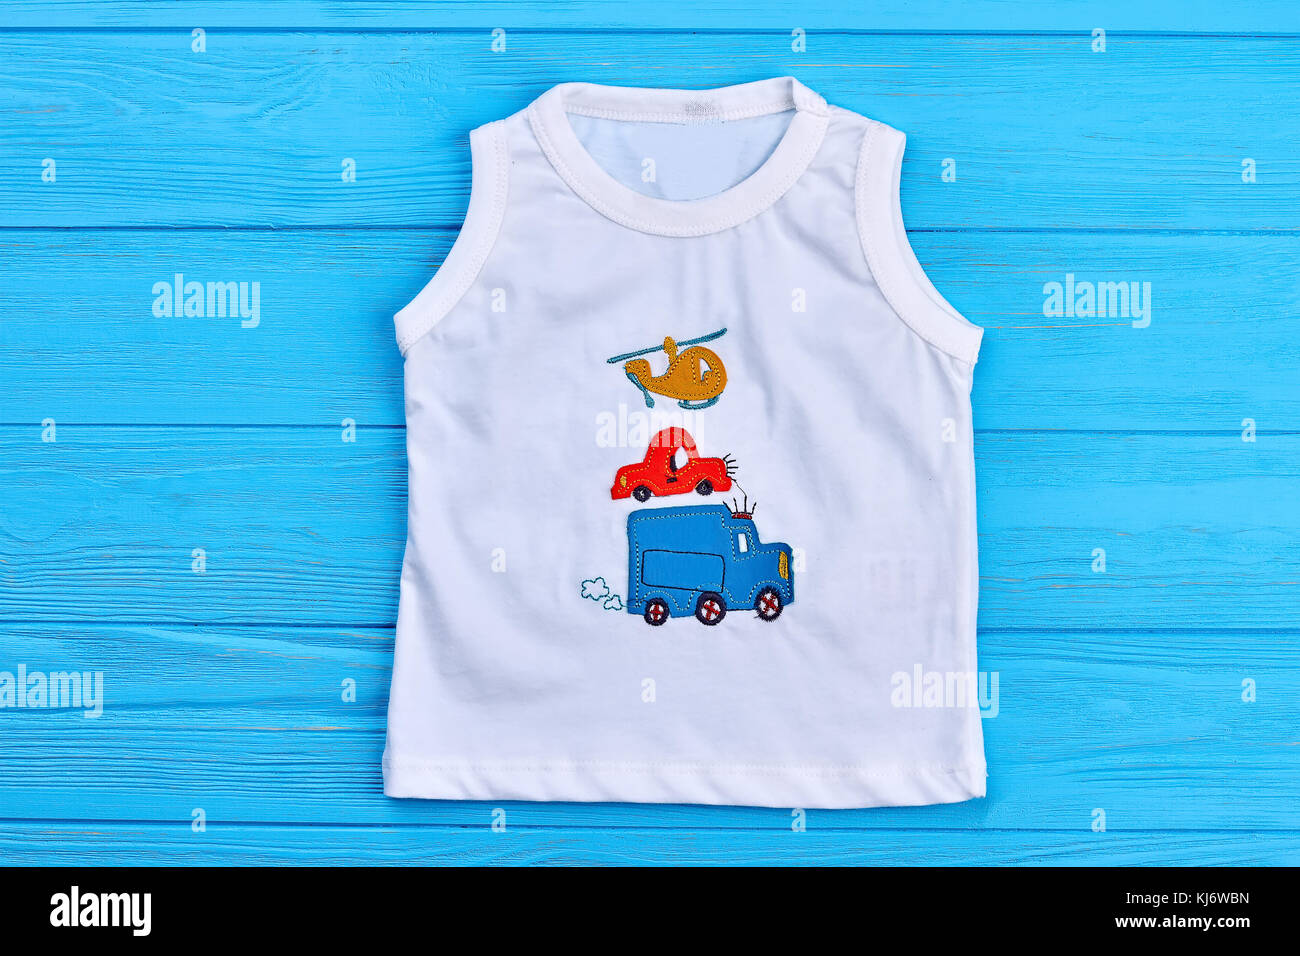 Baby boy white t-shirt print design. Toddler boy cotton t-shirt with  transport illustration, blue wooden background Stock Photo - Alamy